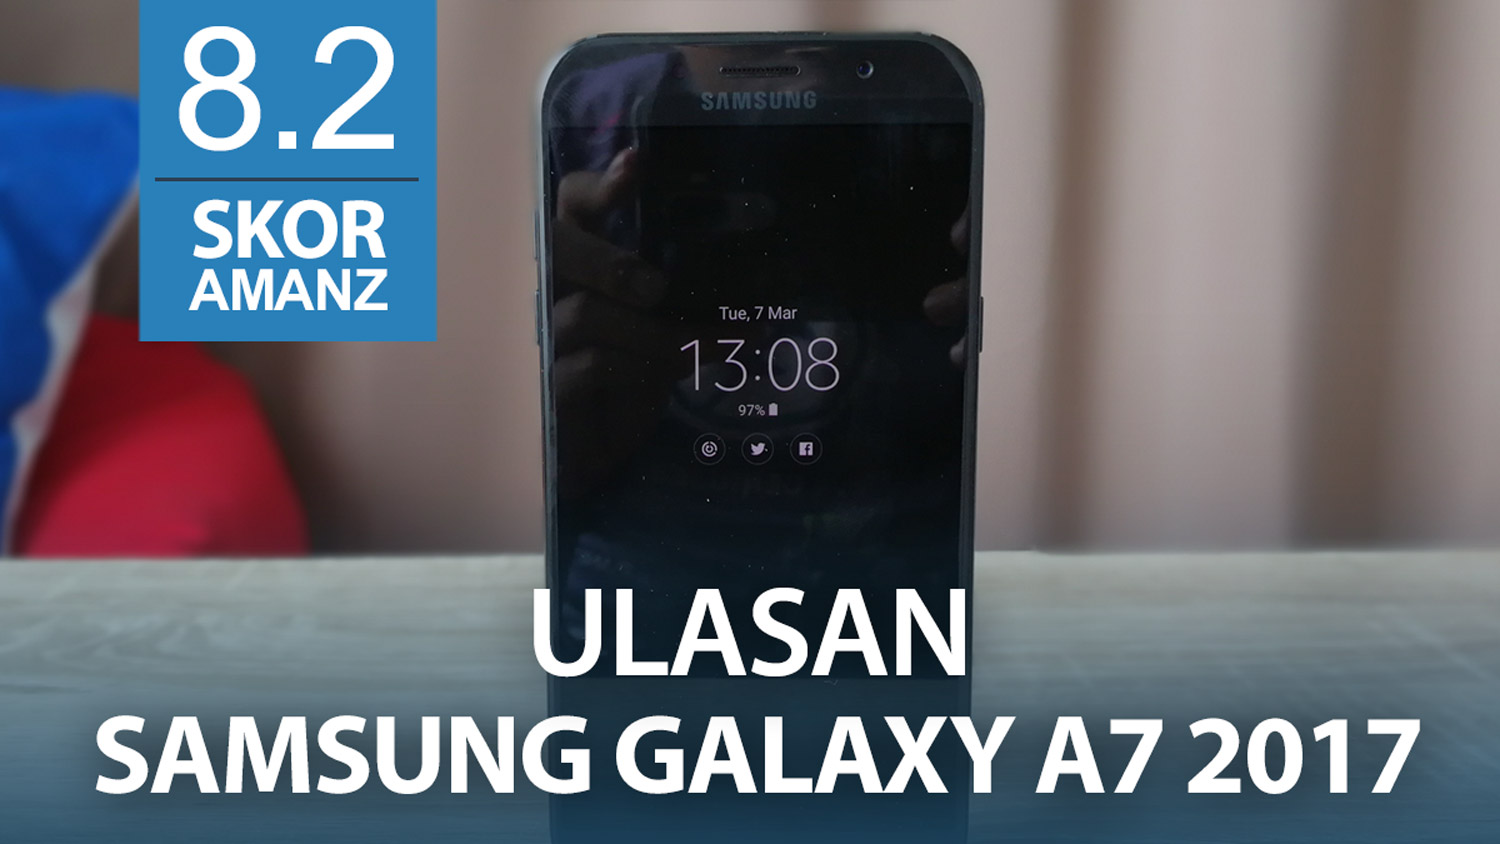 Ulasan Samsung Galaxy A7 2017 – Fungsi Premium Harga Pertengahan